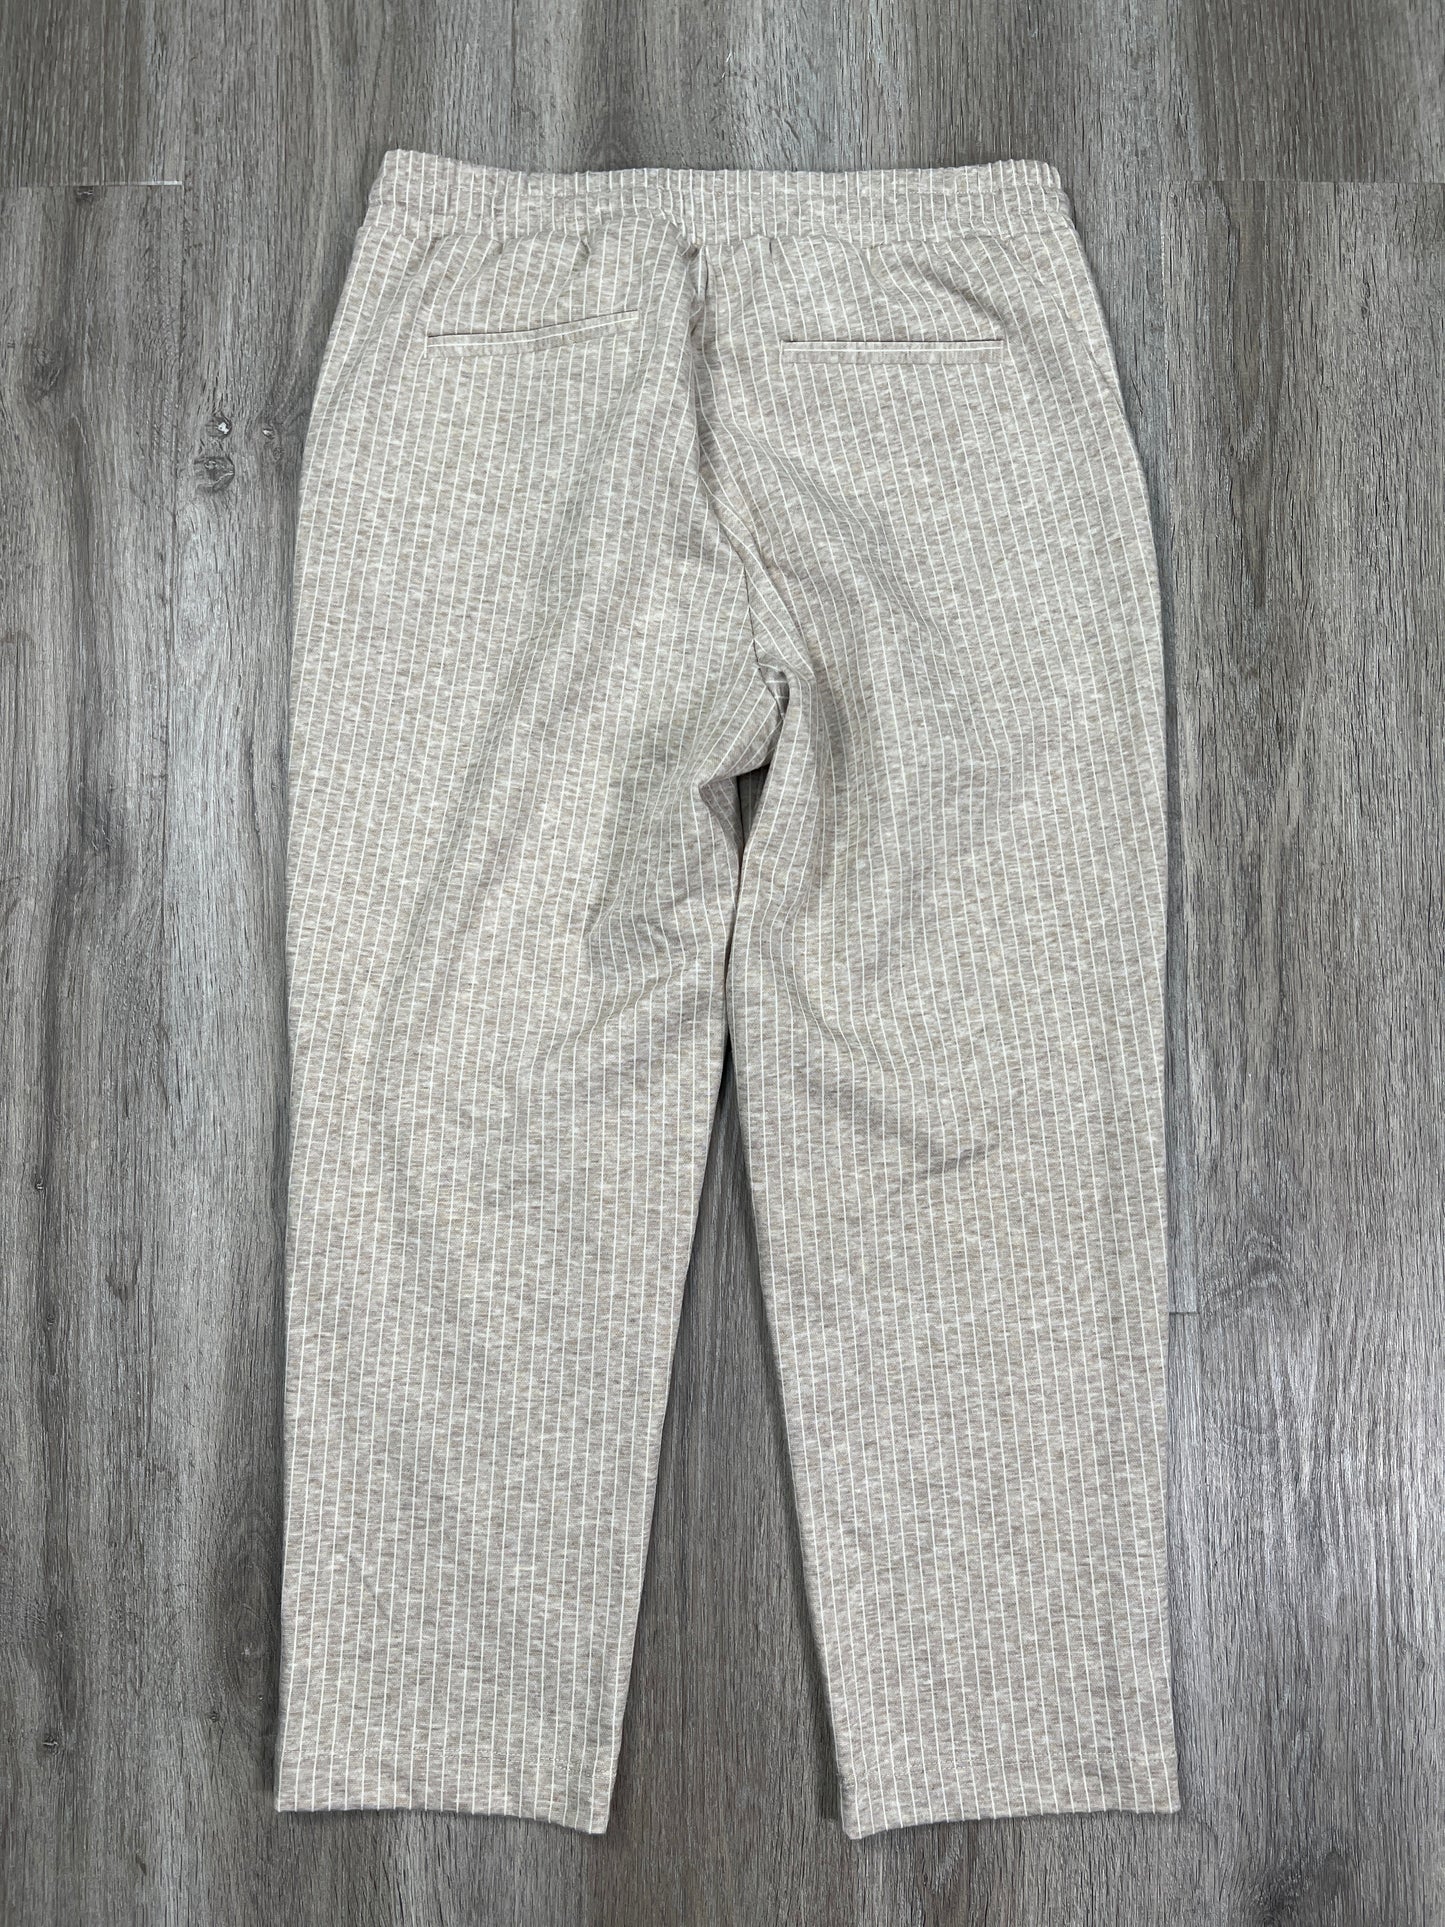 Pants Cropped By Loft  Size: M